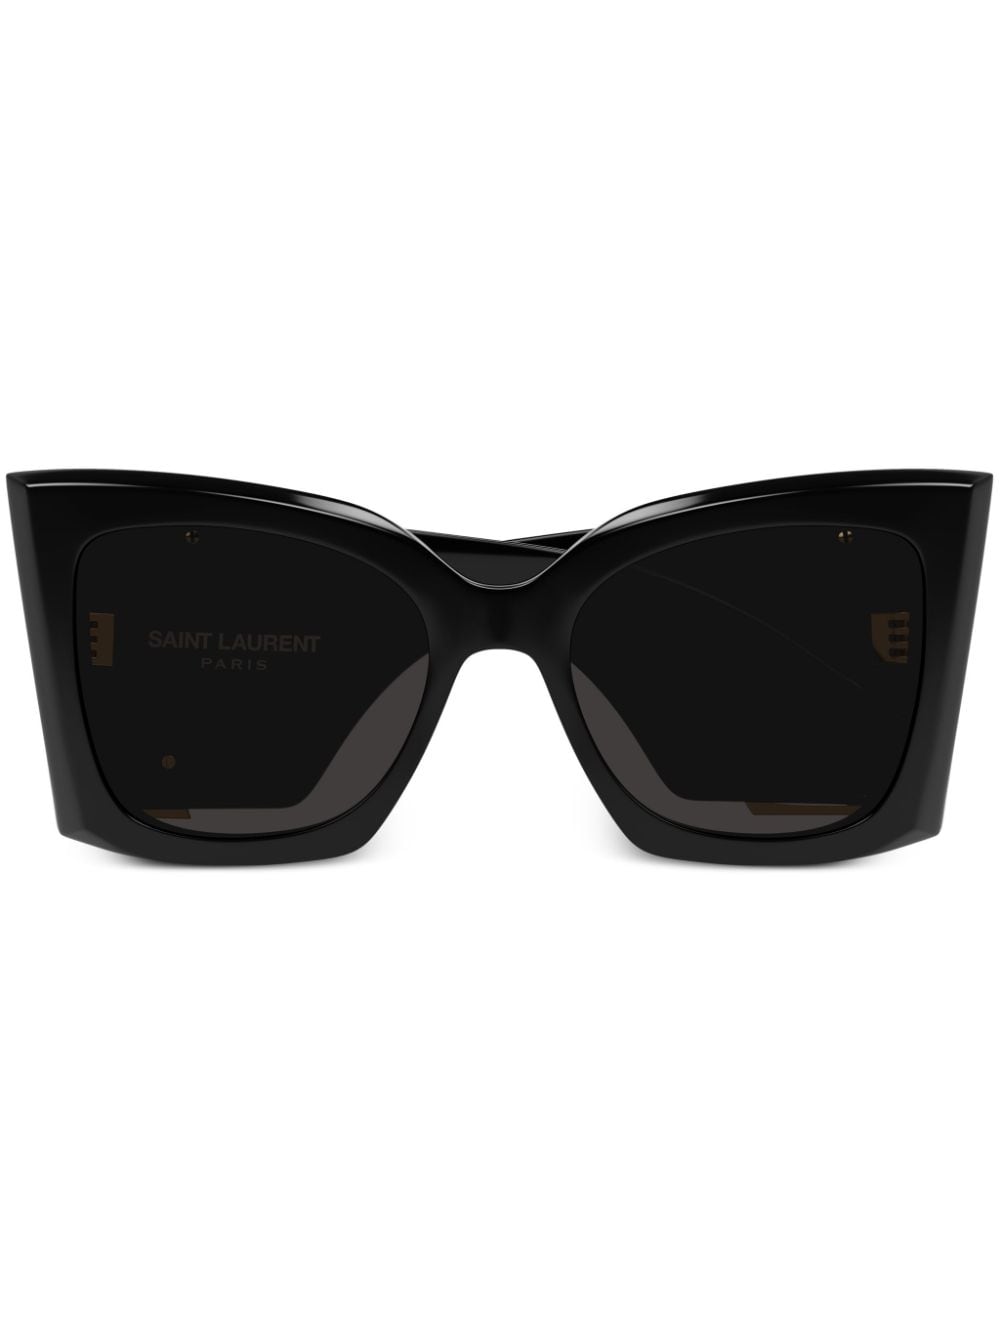 Image 1 of Saint Laurent Eyewear SLP Blaze oversized-frame sunglasses